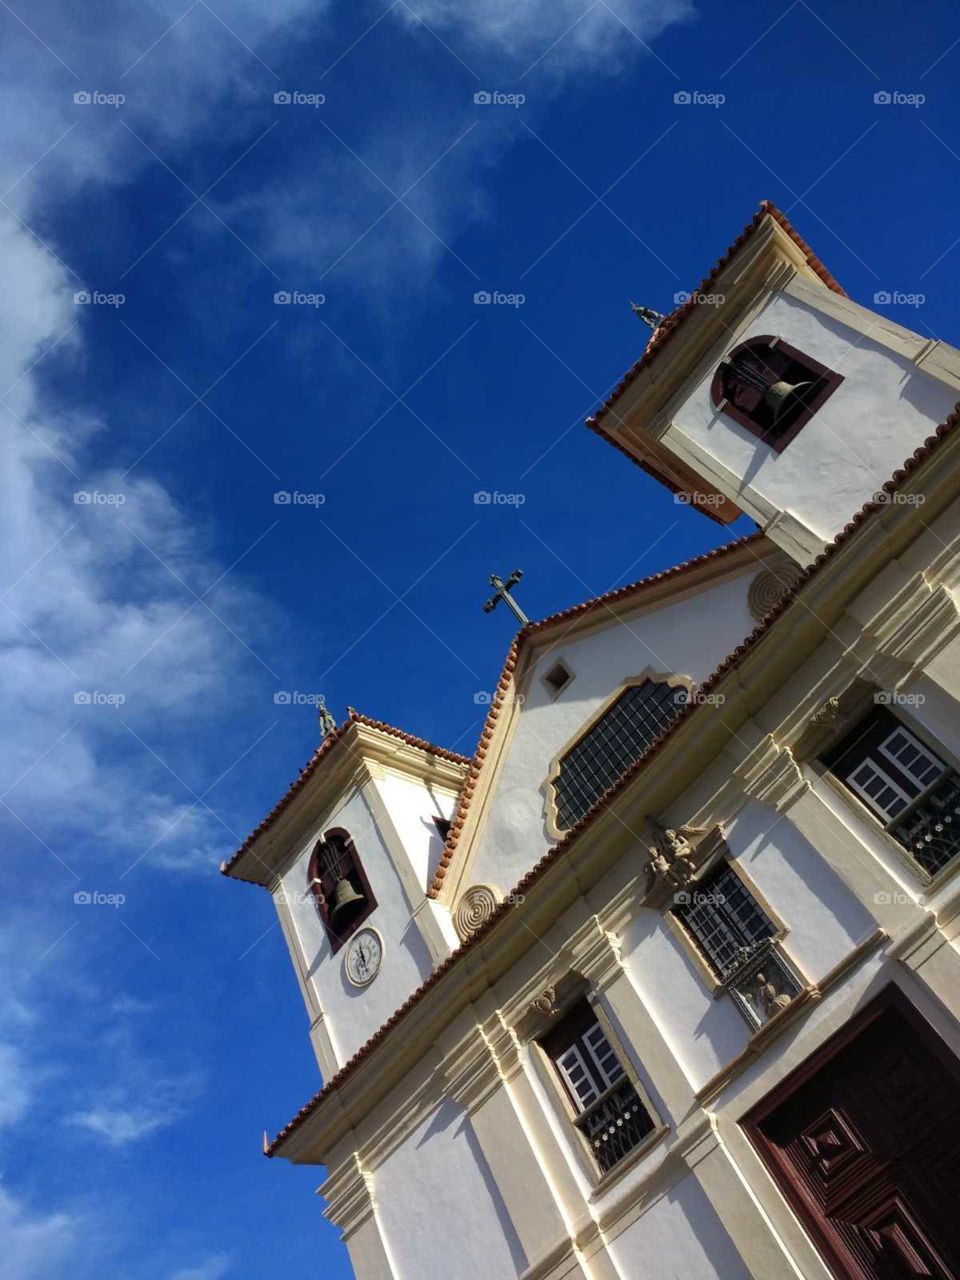 mother church - Mariana - Minas Gerais - Brazil sunny day of blue sky in the historic city center